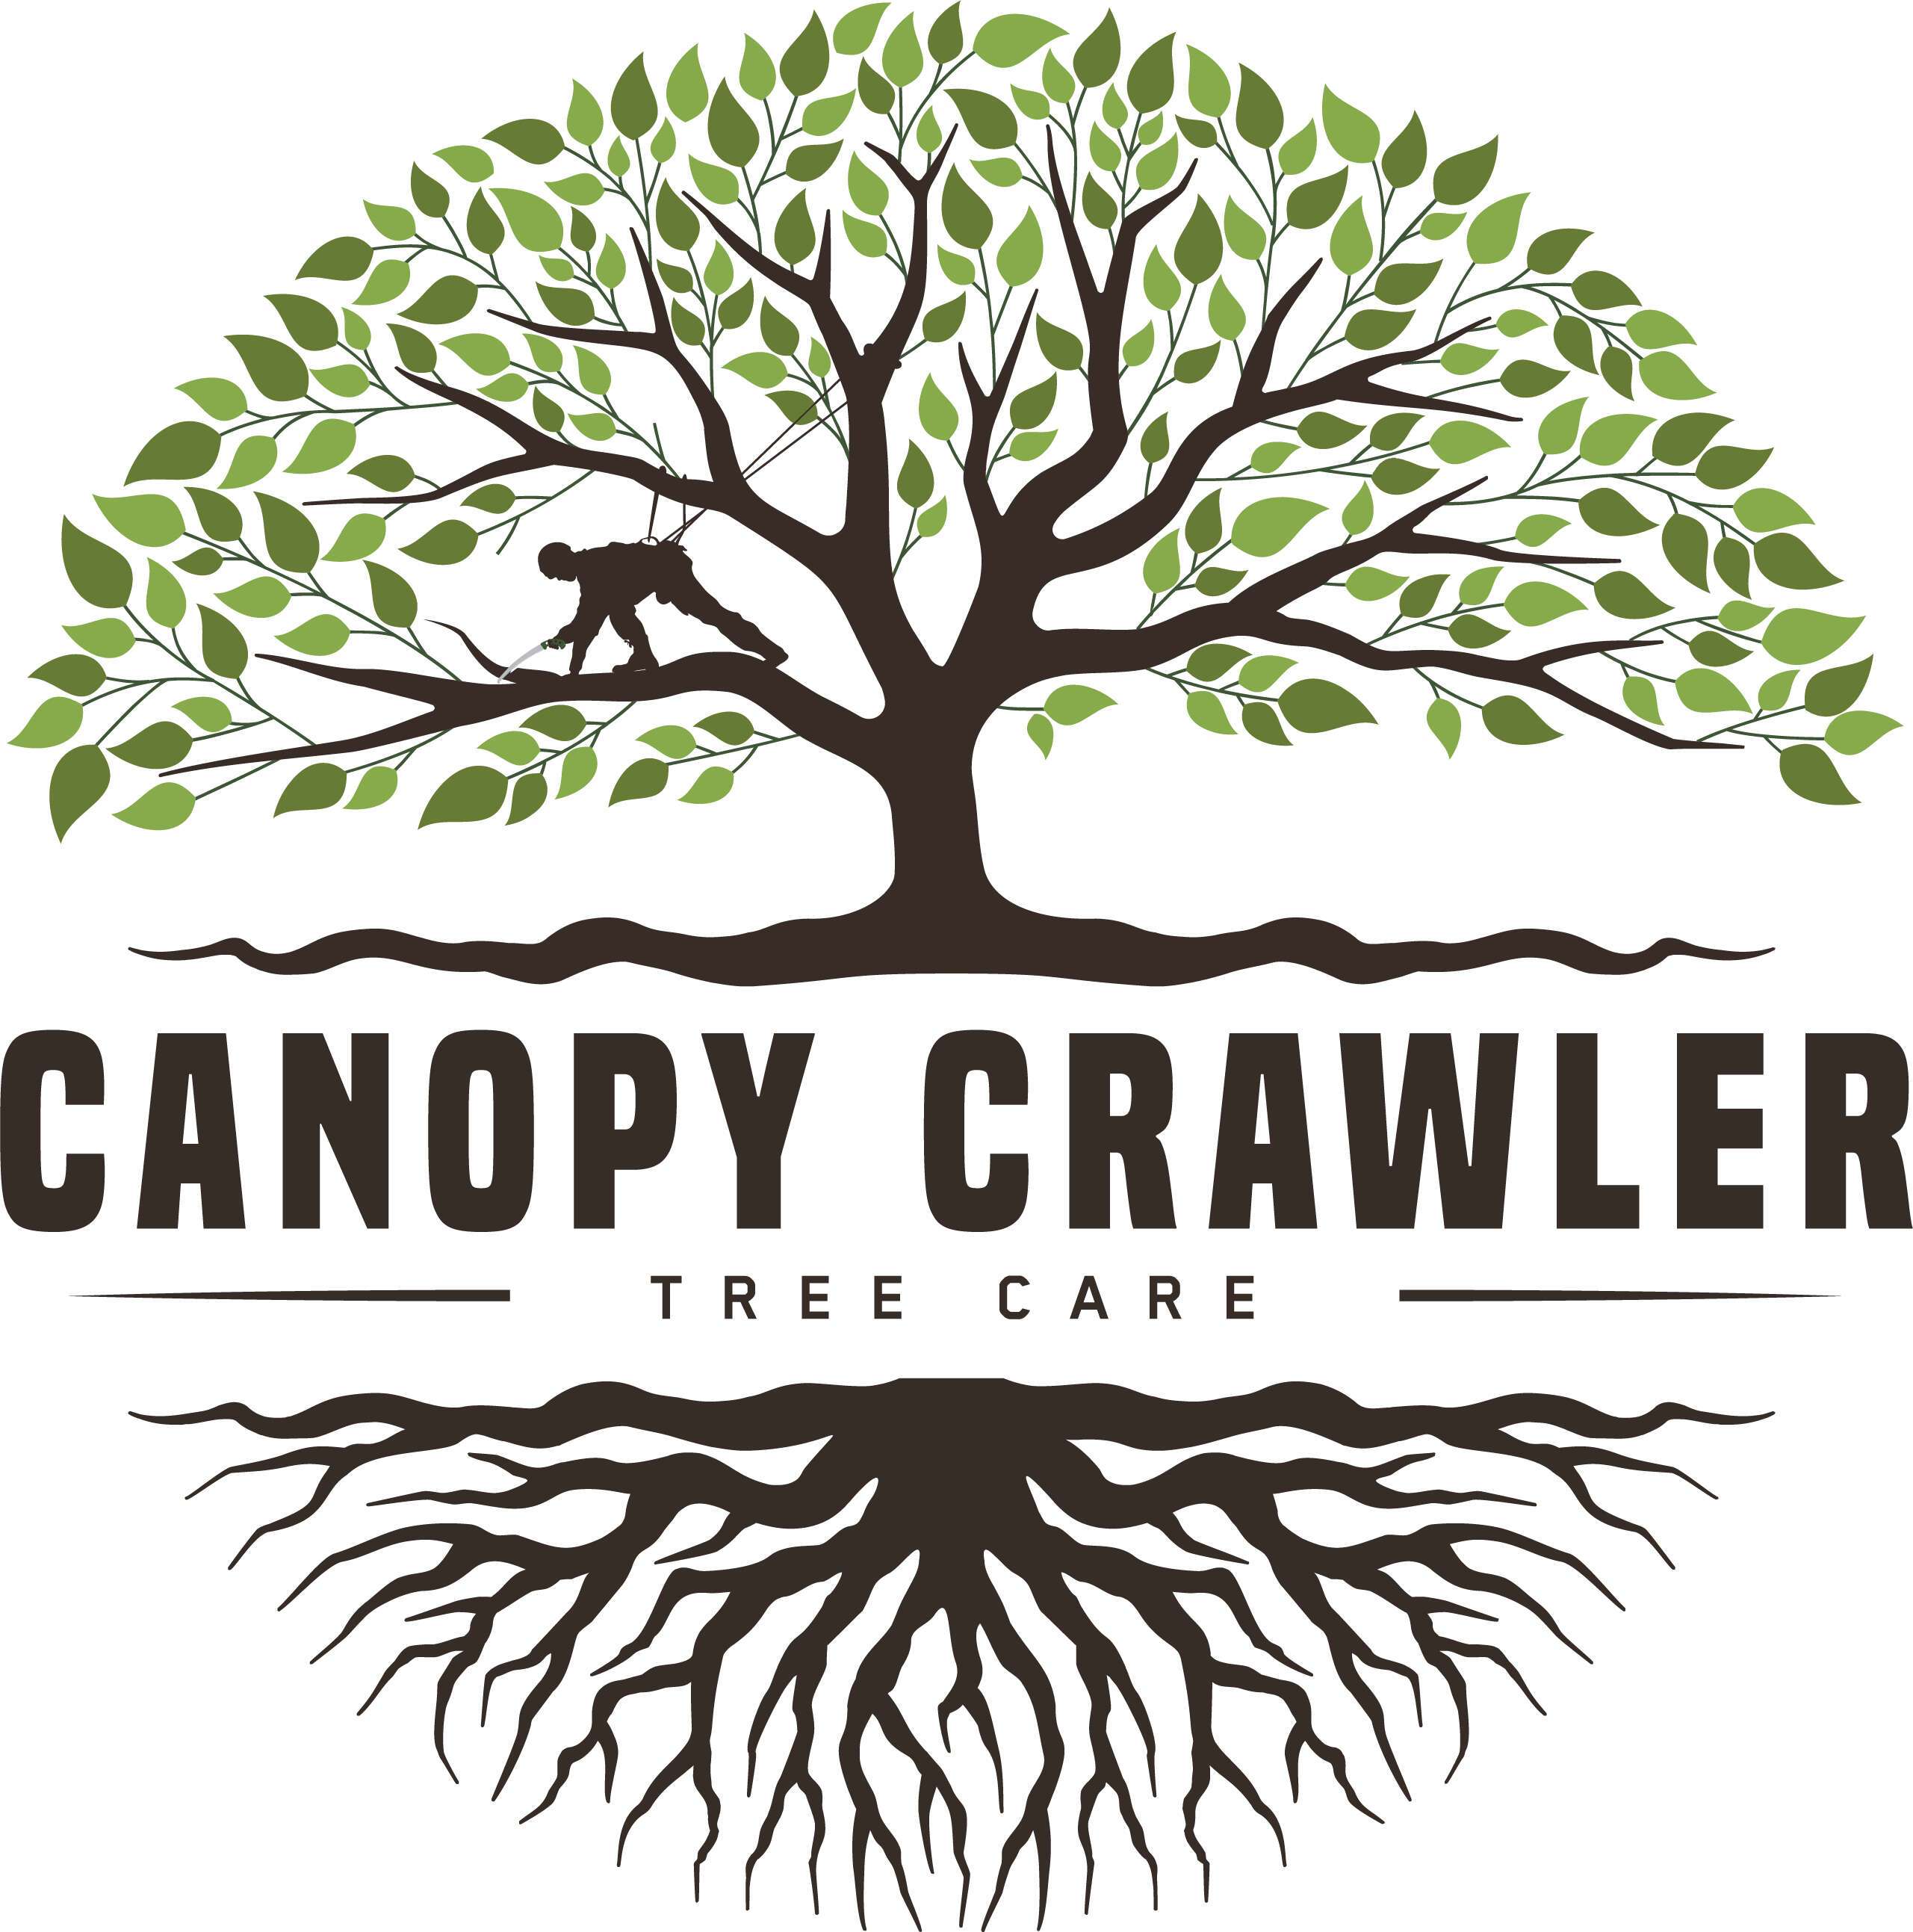 Canopy Crawler Tree Care